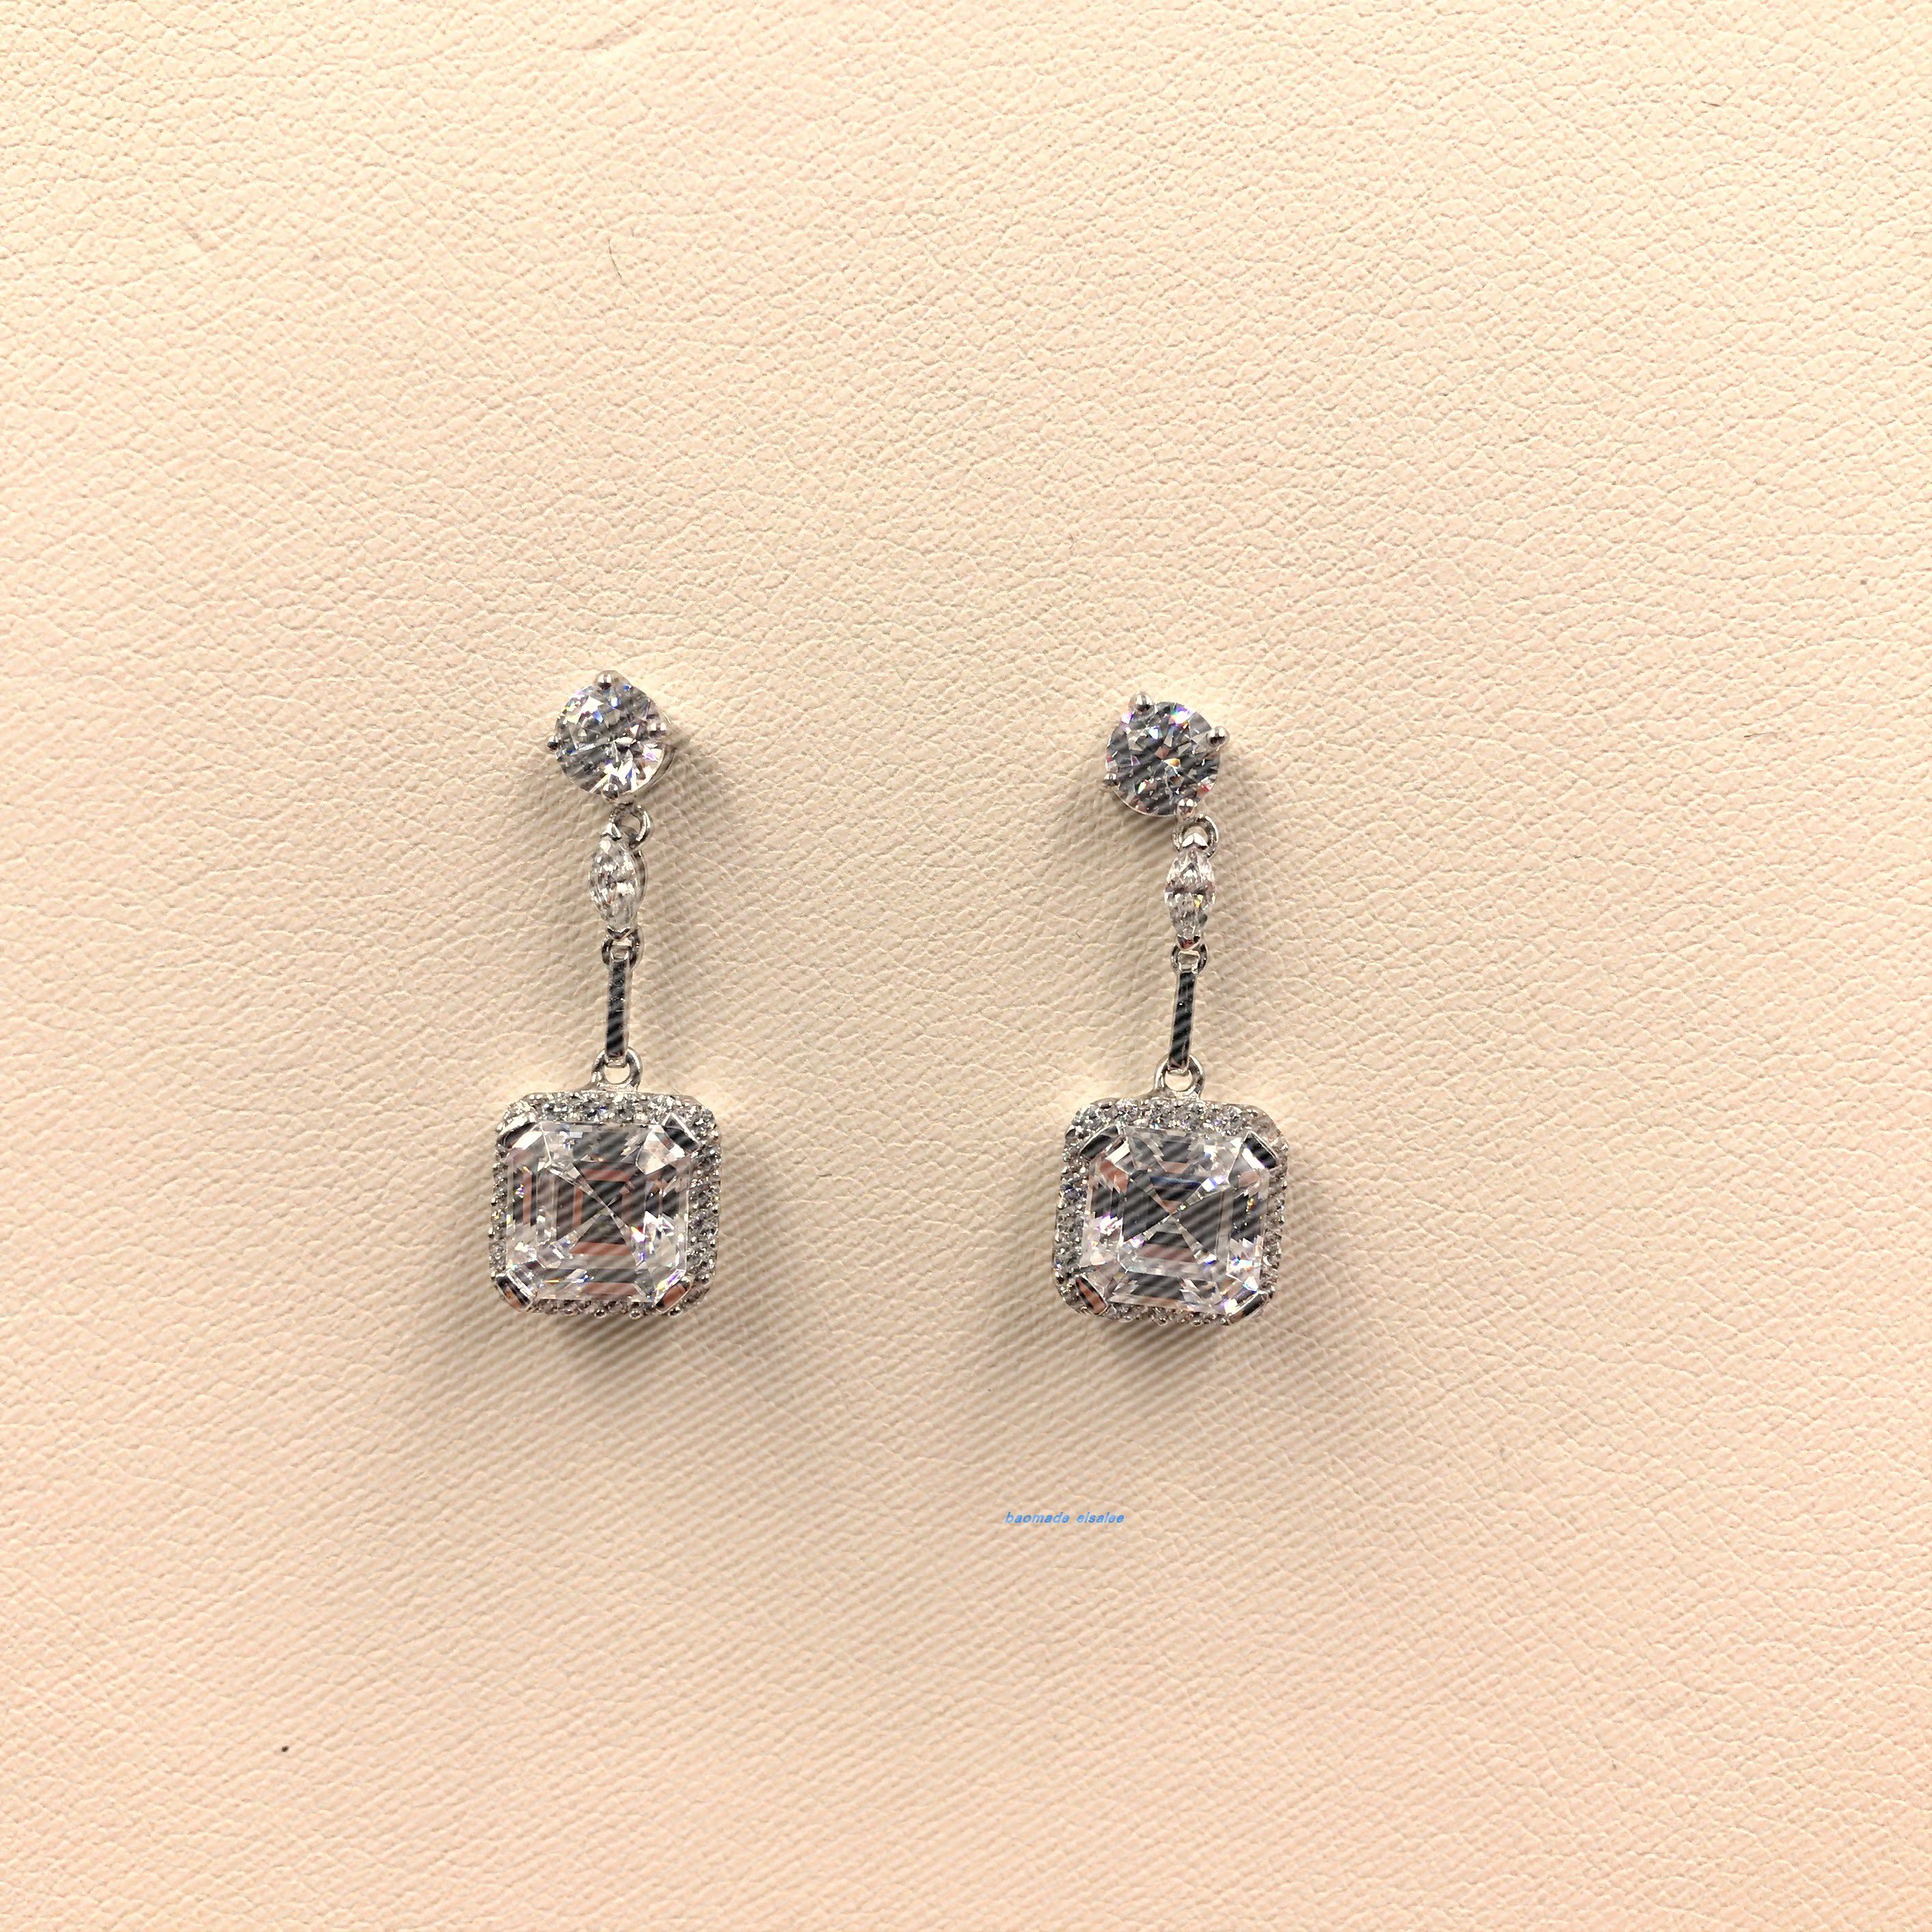 Elsalee925纯银18K镀金镶嵌水钻项链戒指耳环套装